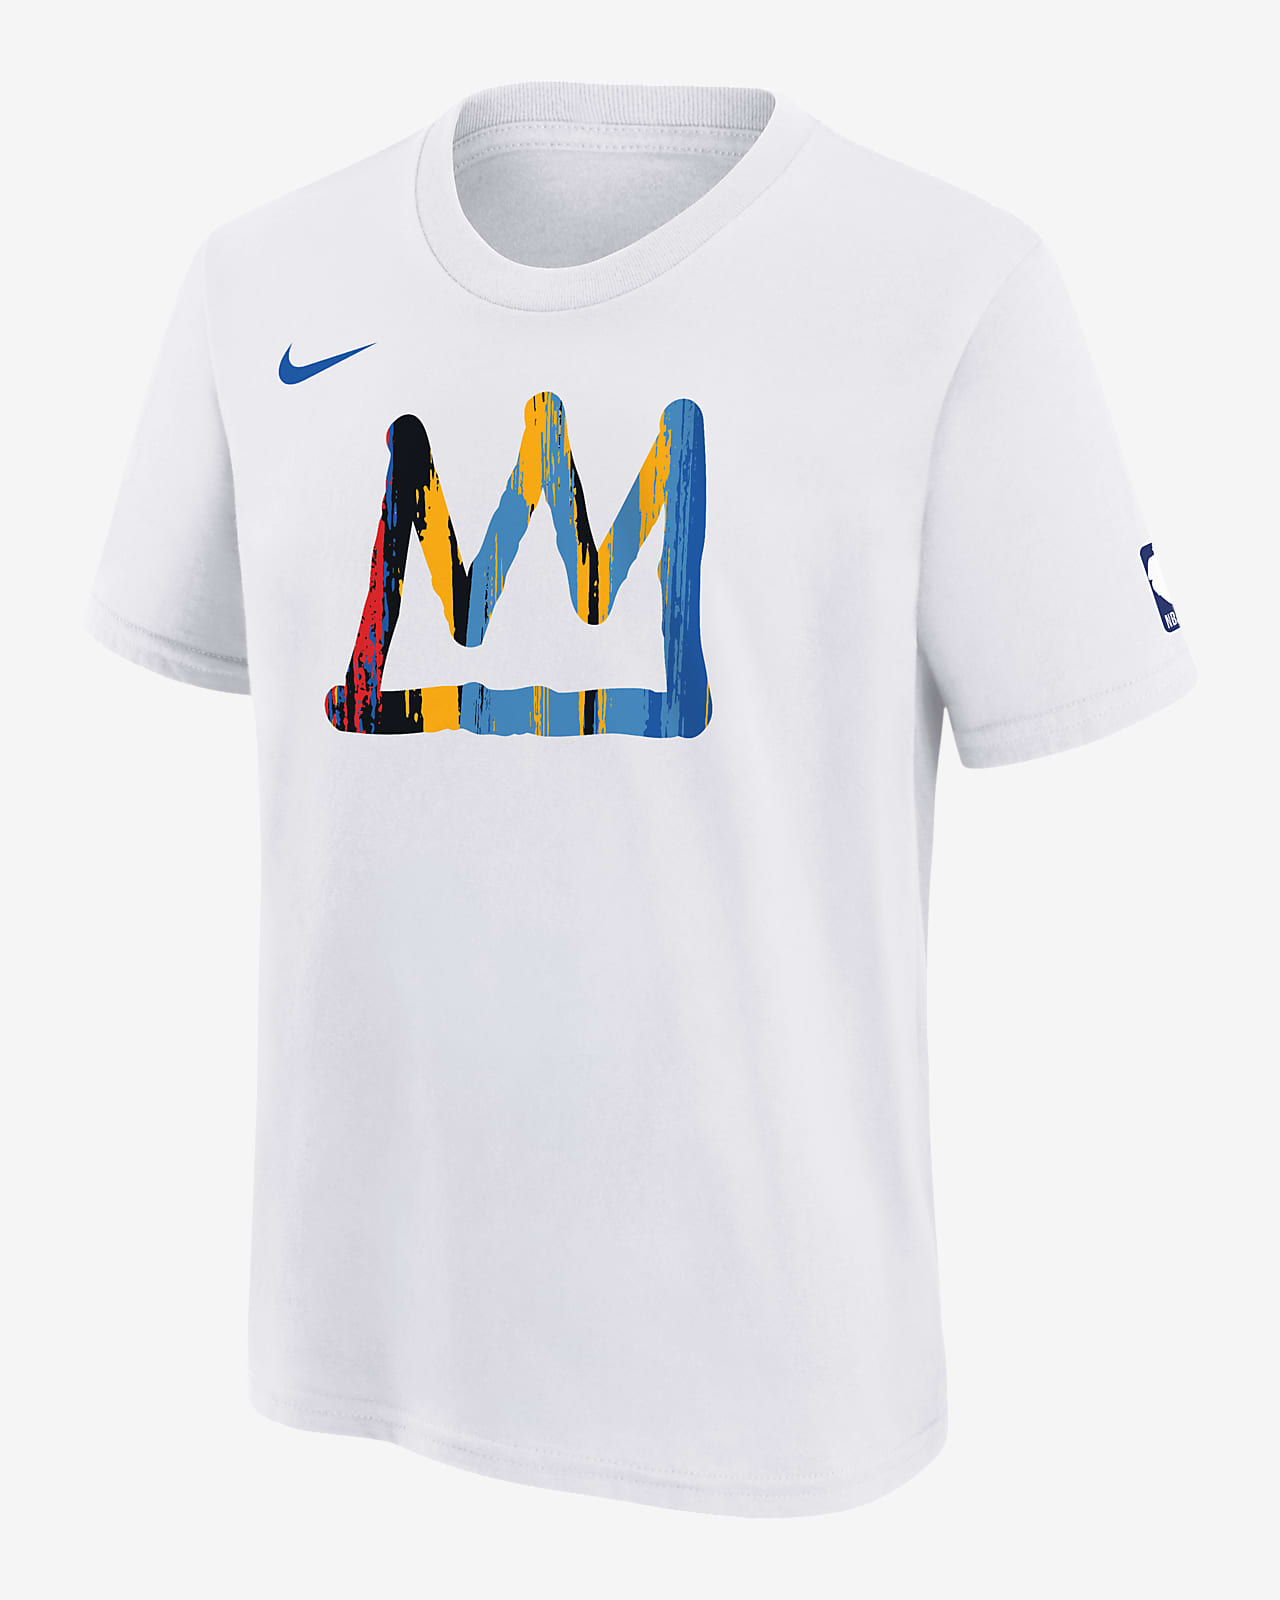 Brooklyn Nets basketball Champions fire logo shirt, hoodie